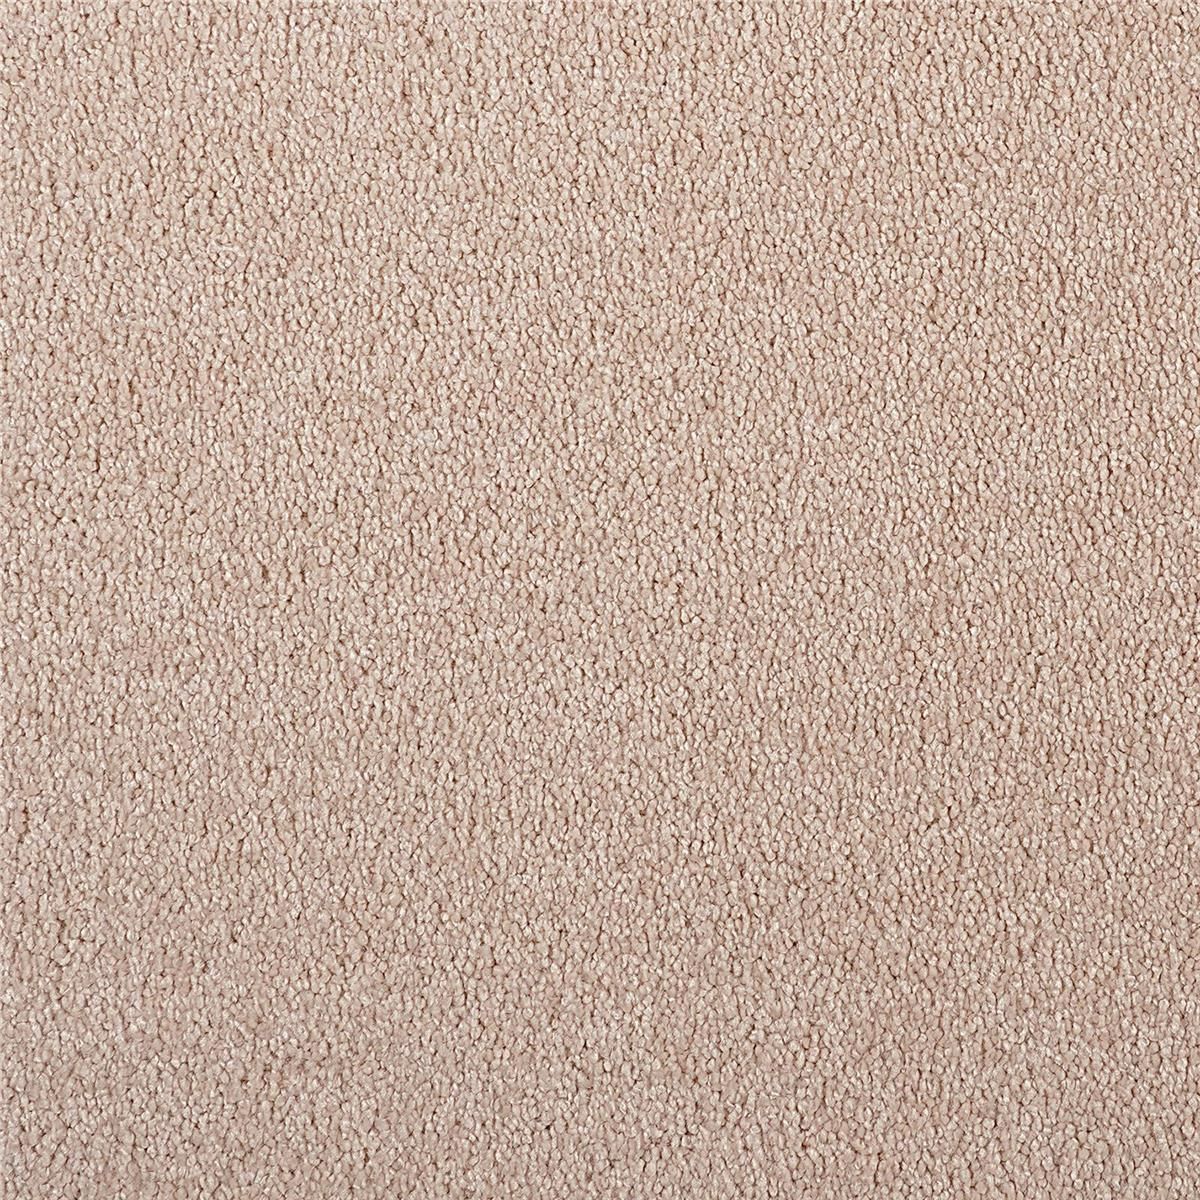 Teppichboden Infloor-Girloon Coco Shag/Langflor Beige 820 uni - Rollenbreite 200 cm